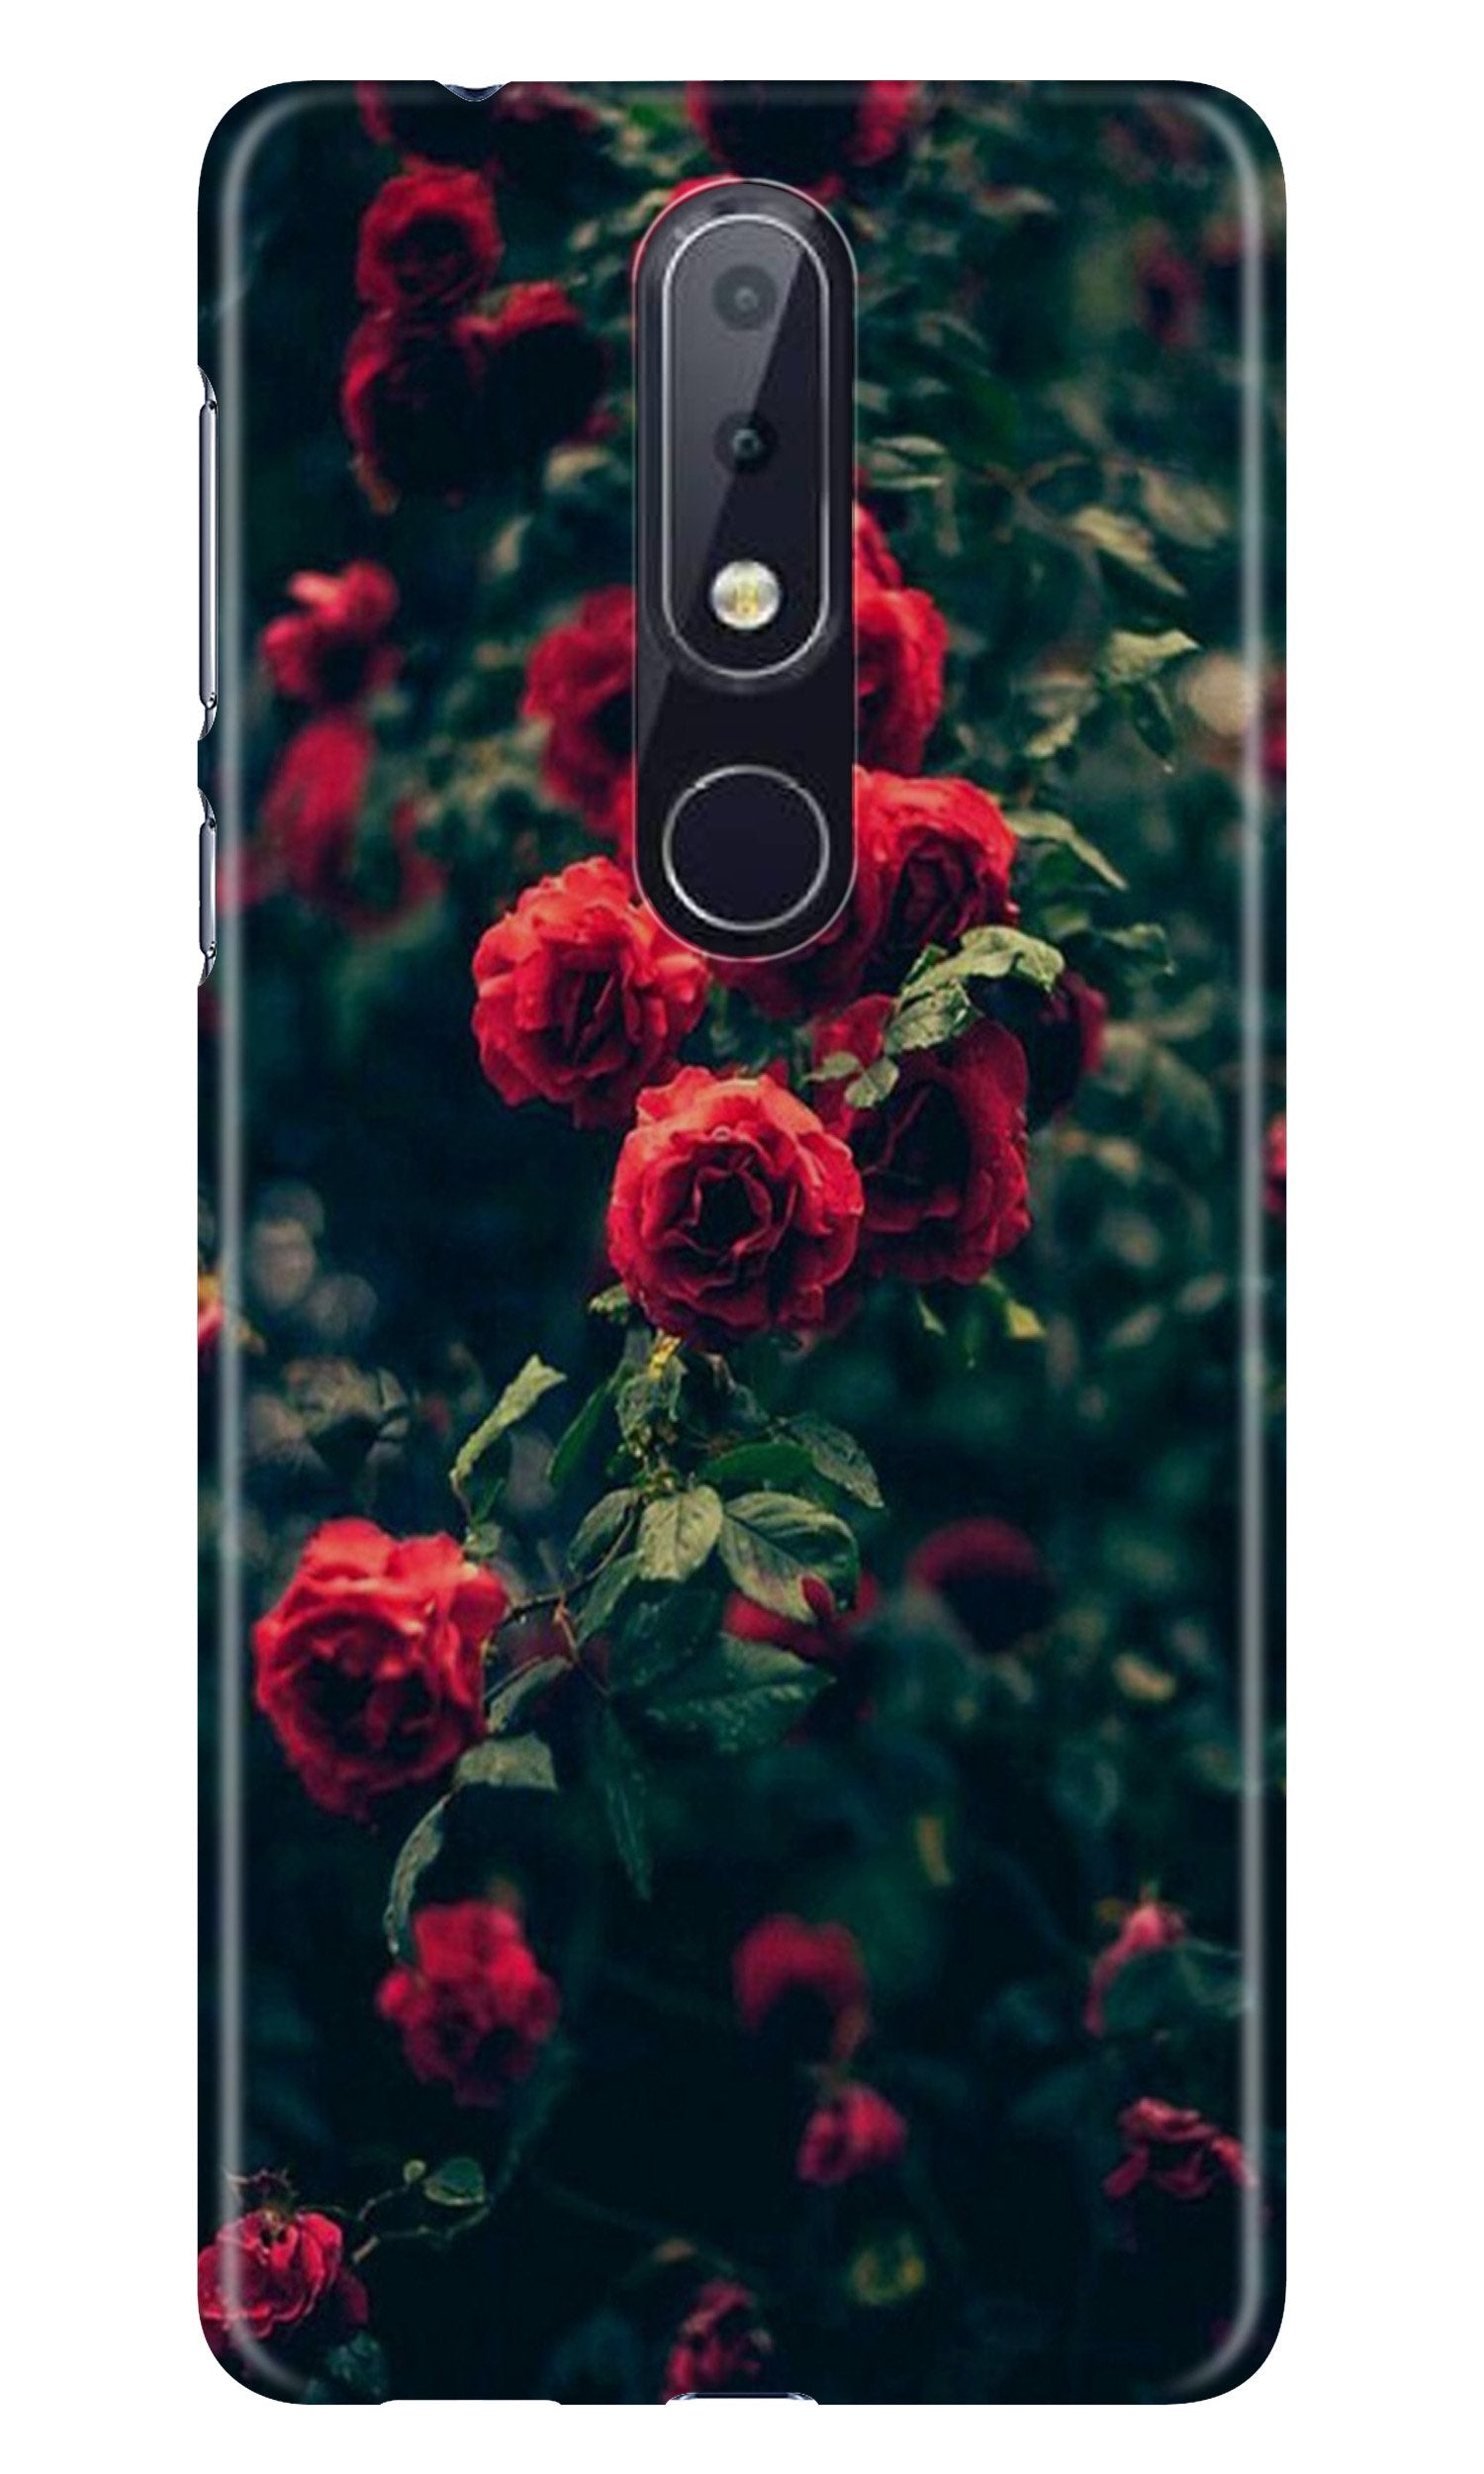 Red Rose Case for Nokia 6.1 Plus